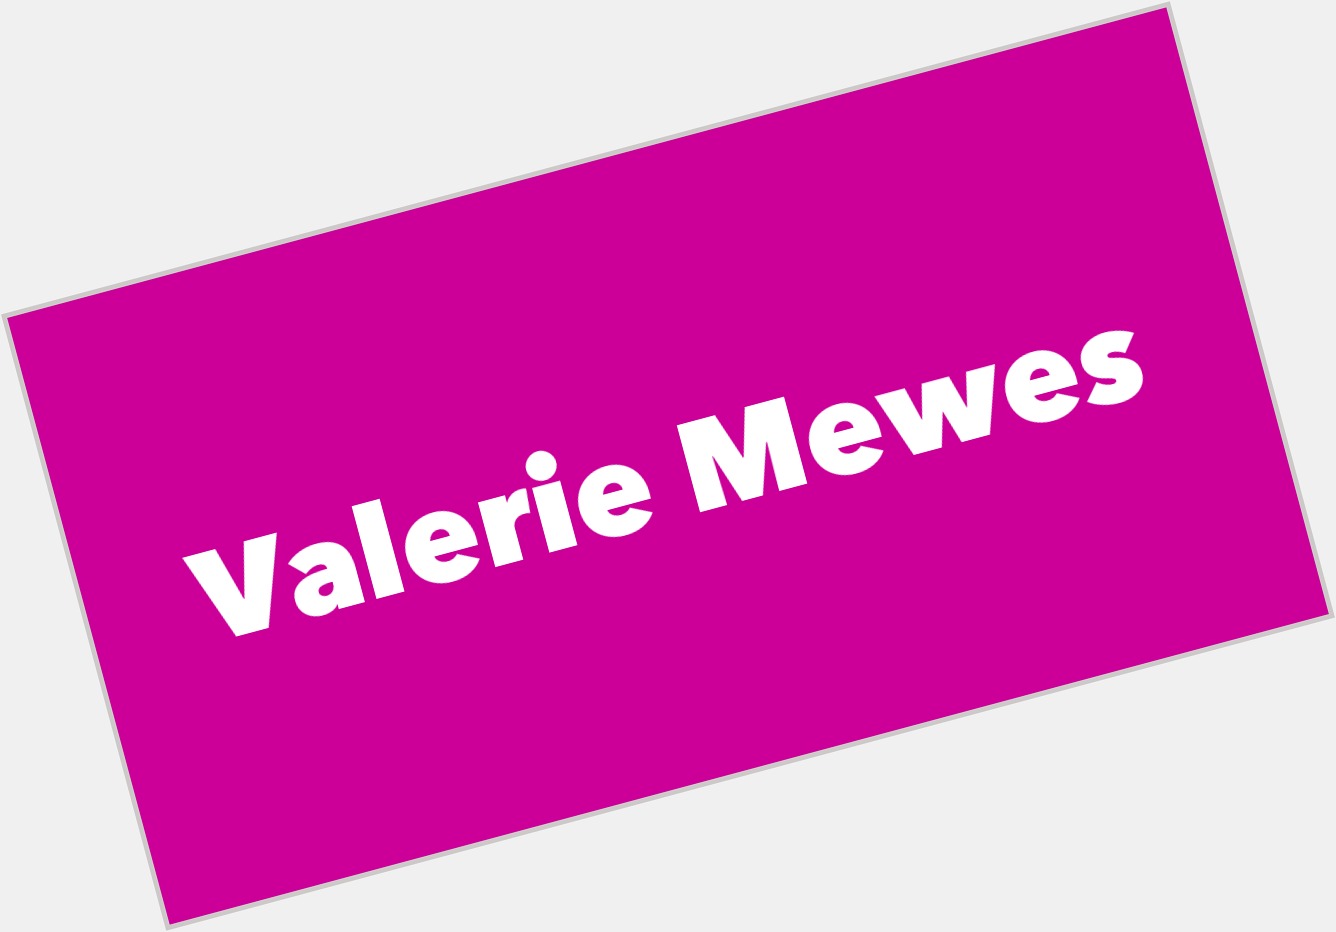 Valerie Mewes  